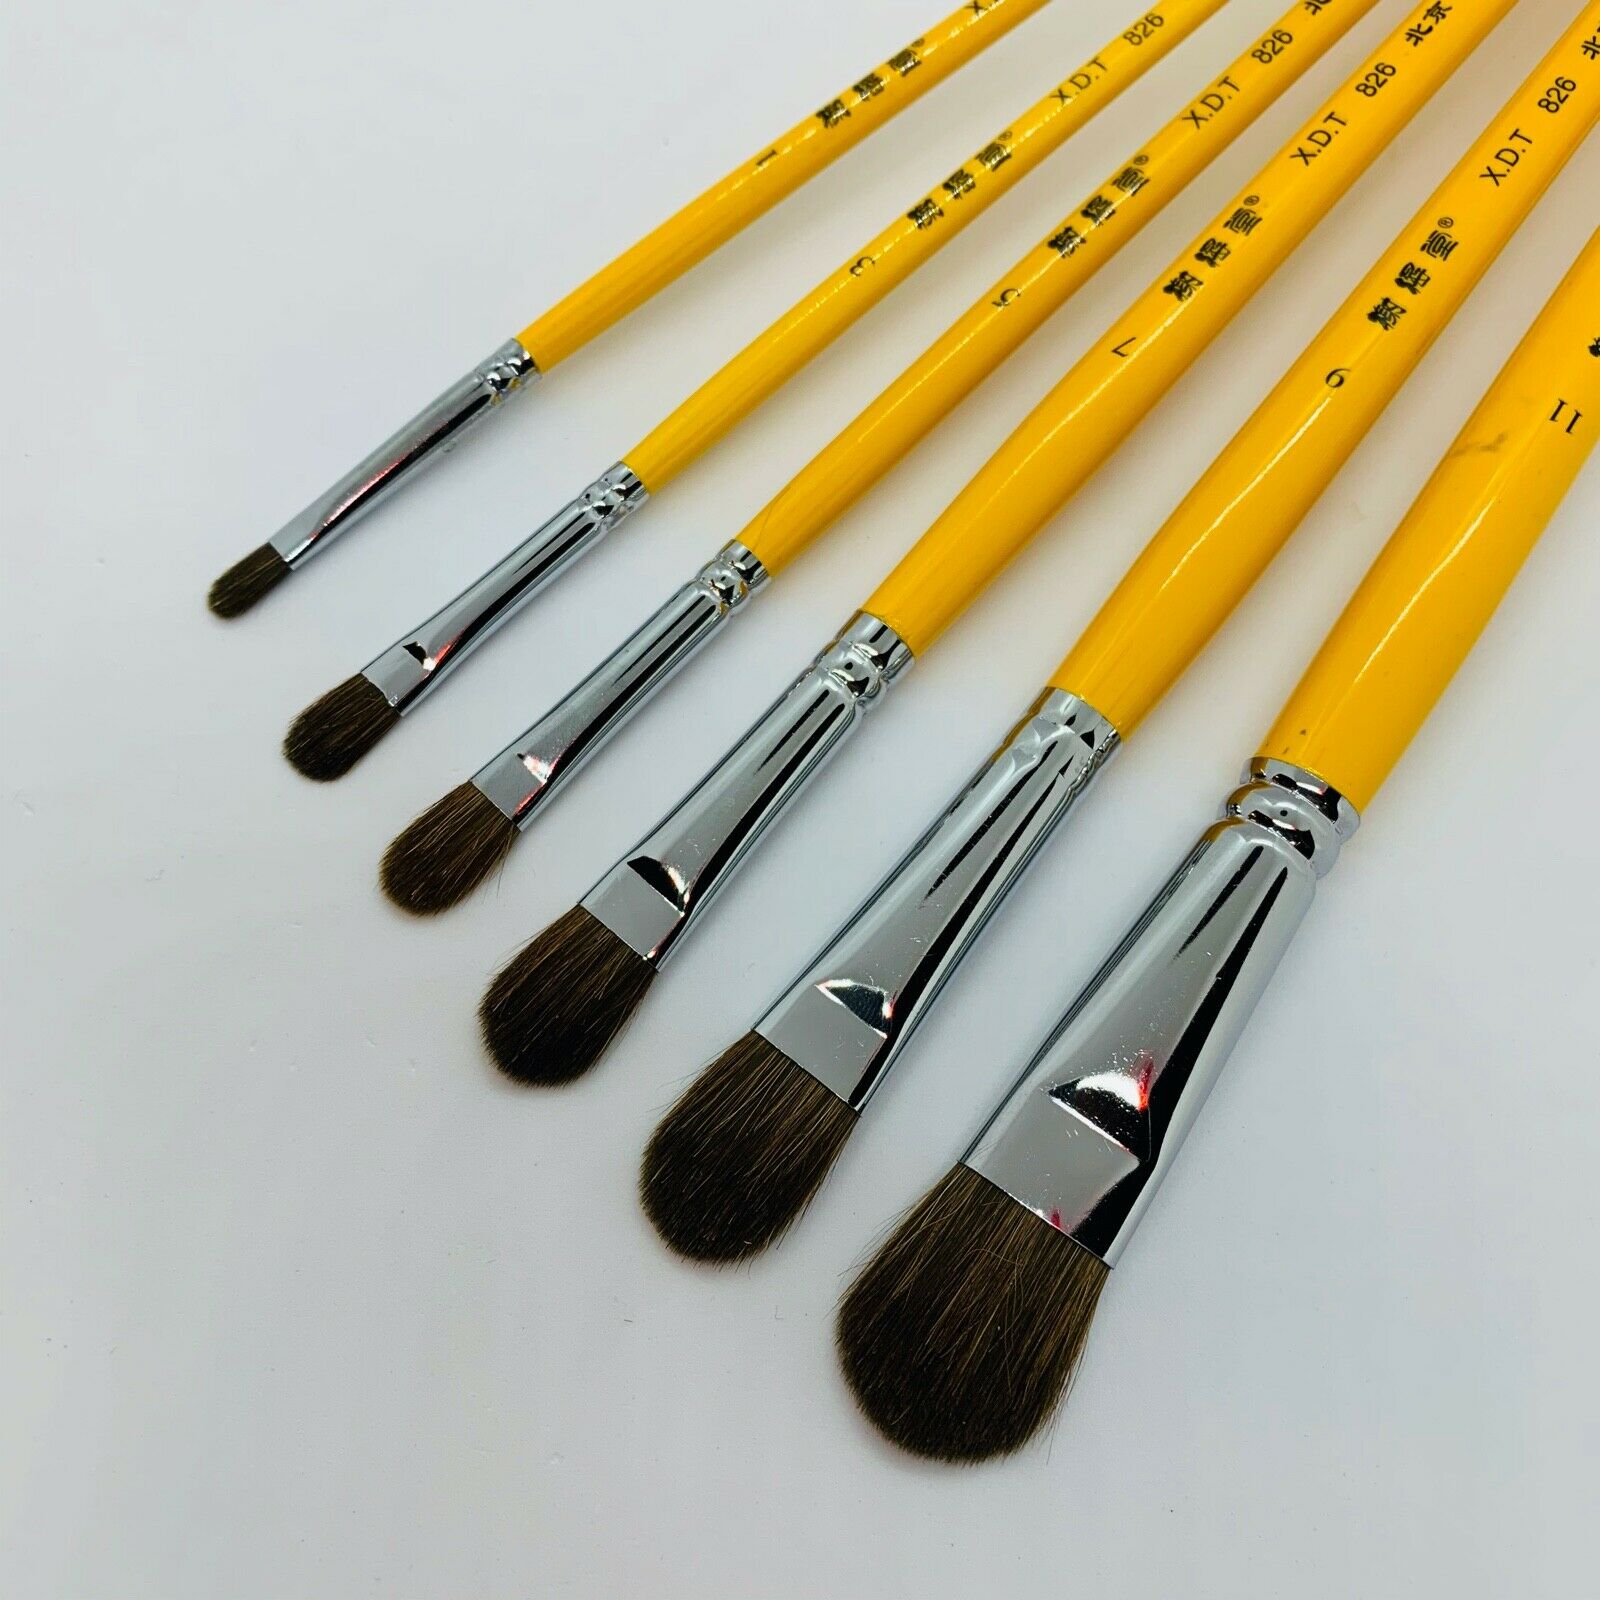 Xdt#826 Filbert Style Artist Paint Brush Art Brushes 6pc Oil Watercolor Acrylic